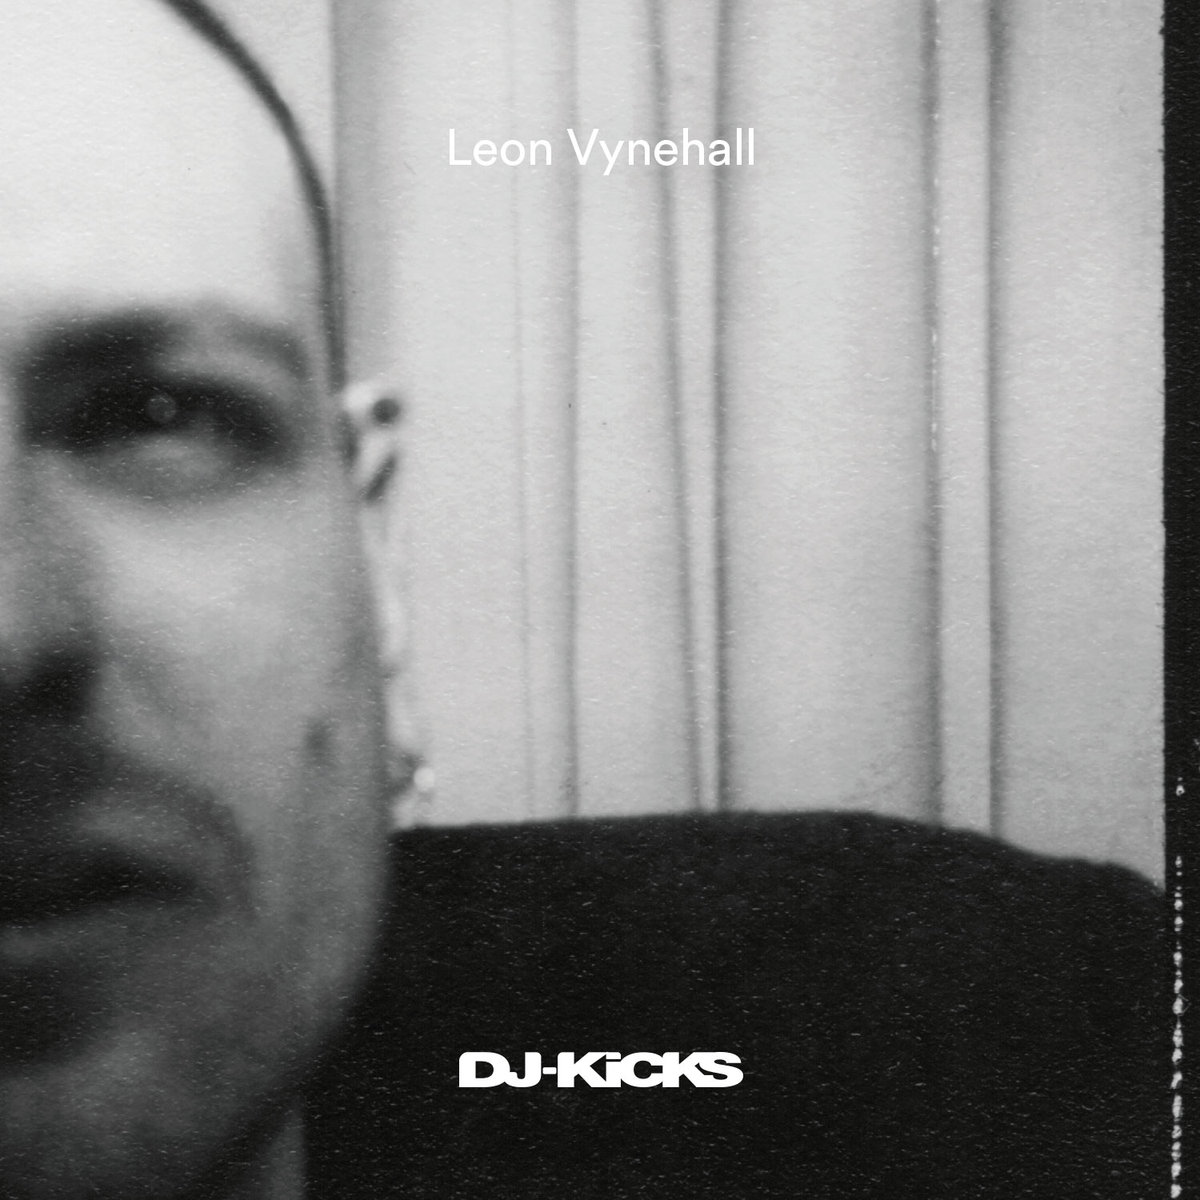 Leon Vynehall – DJ-Kicks